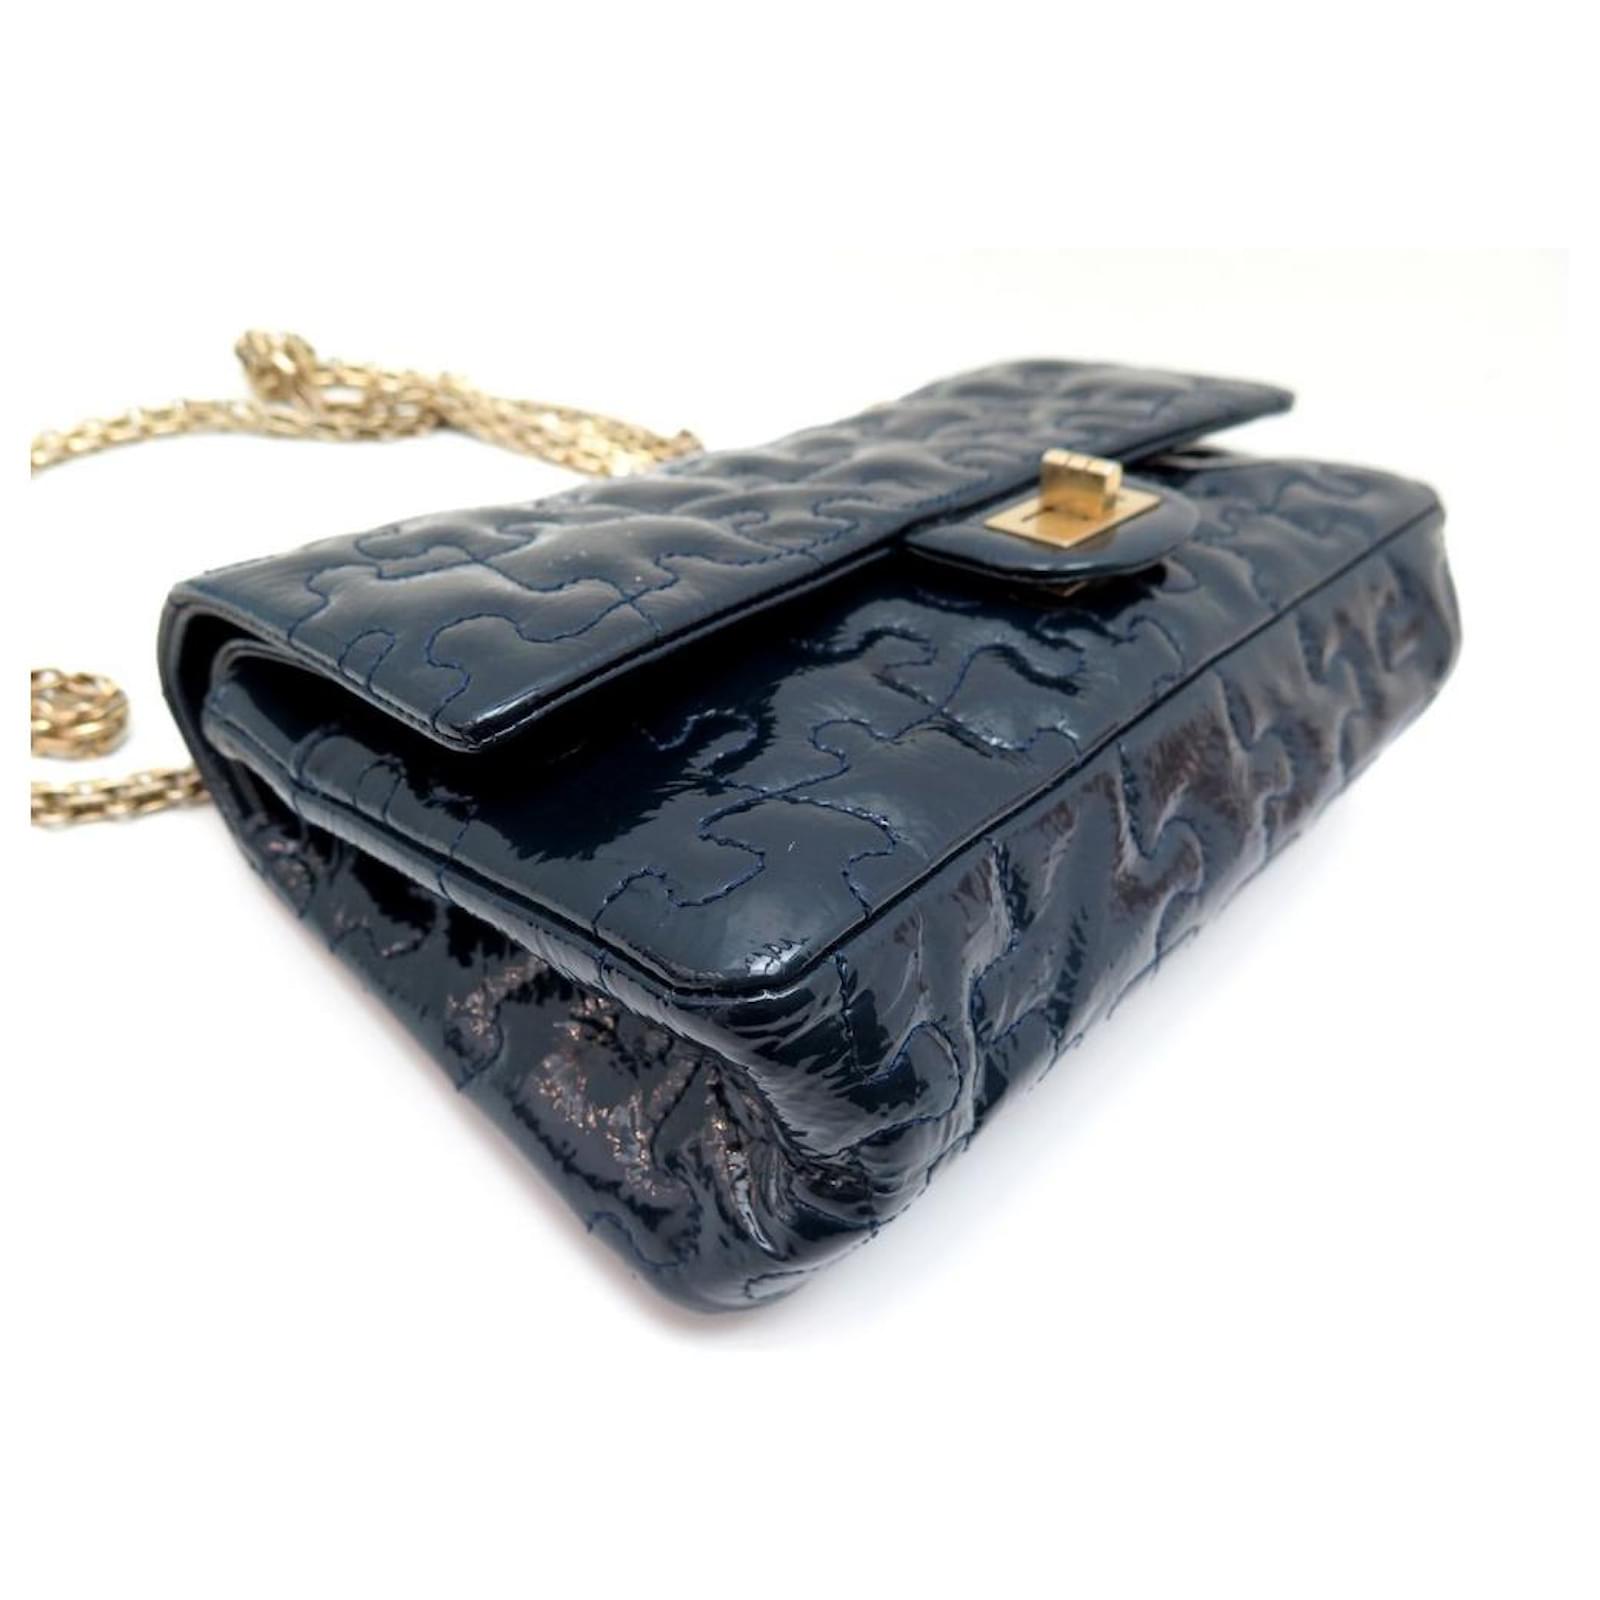 Handbags Chanel Chanel Handbag 2.55 Puzzle mm Crossbody in Blue Patent Leather Handbag